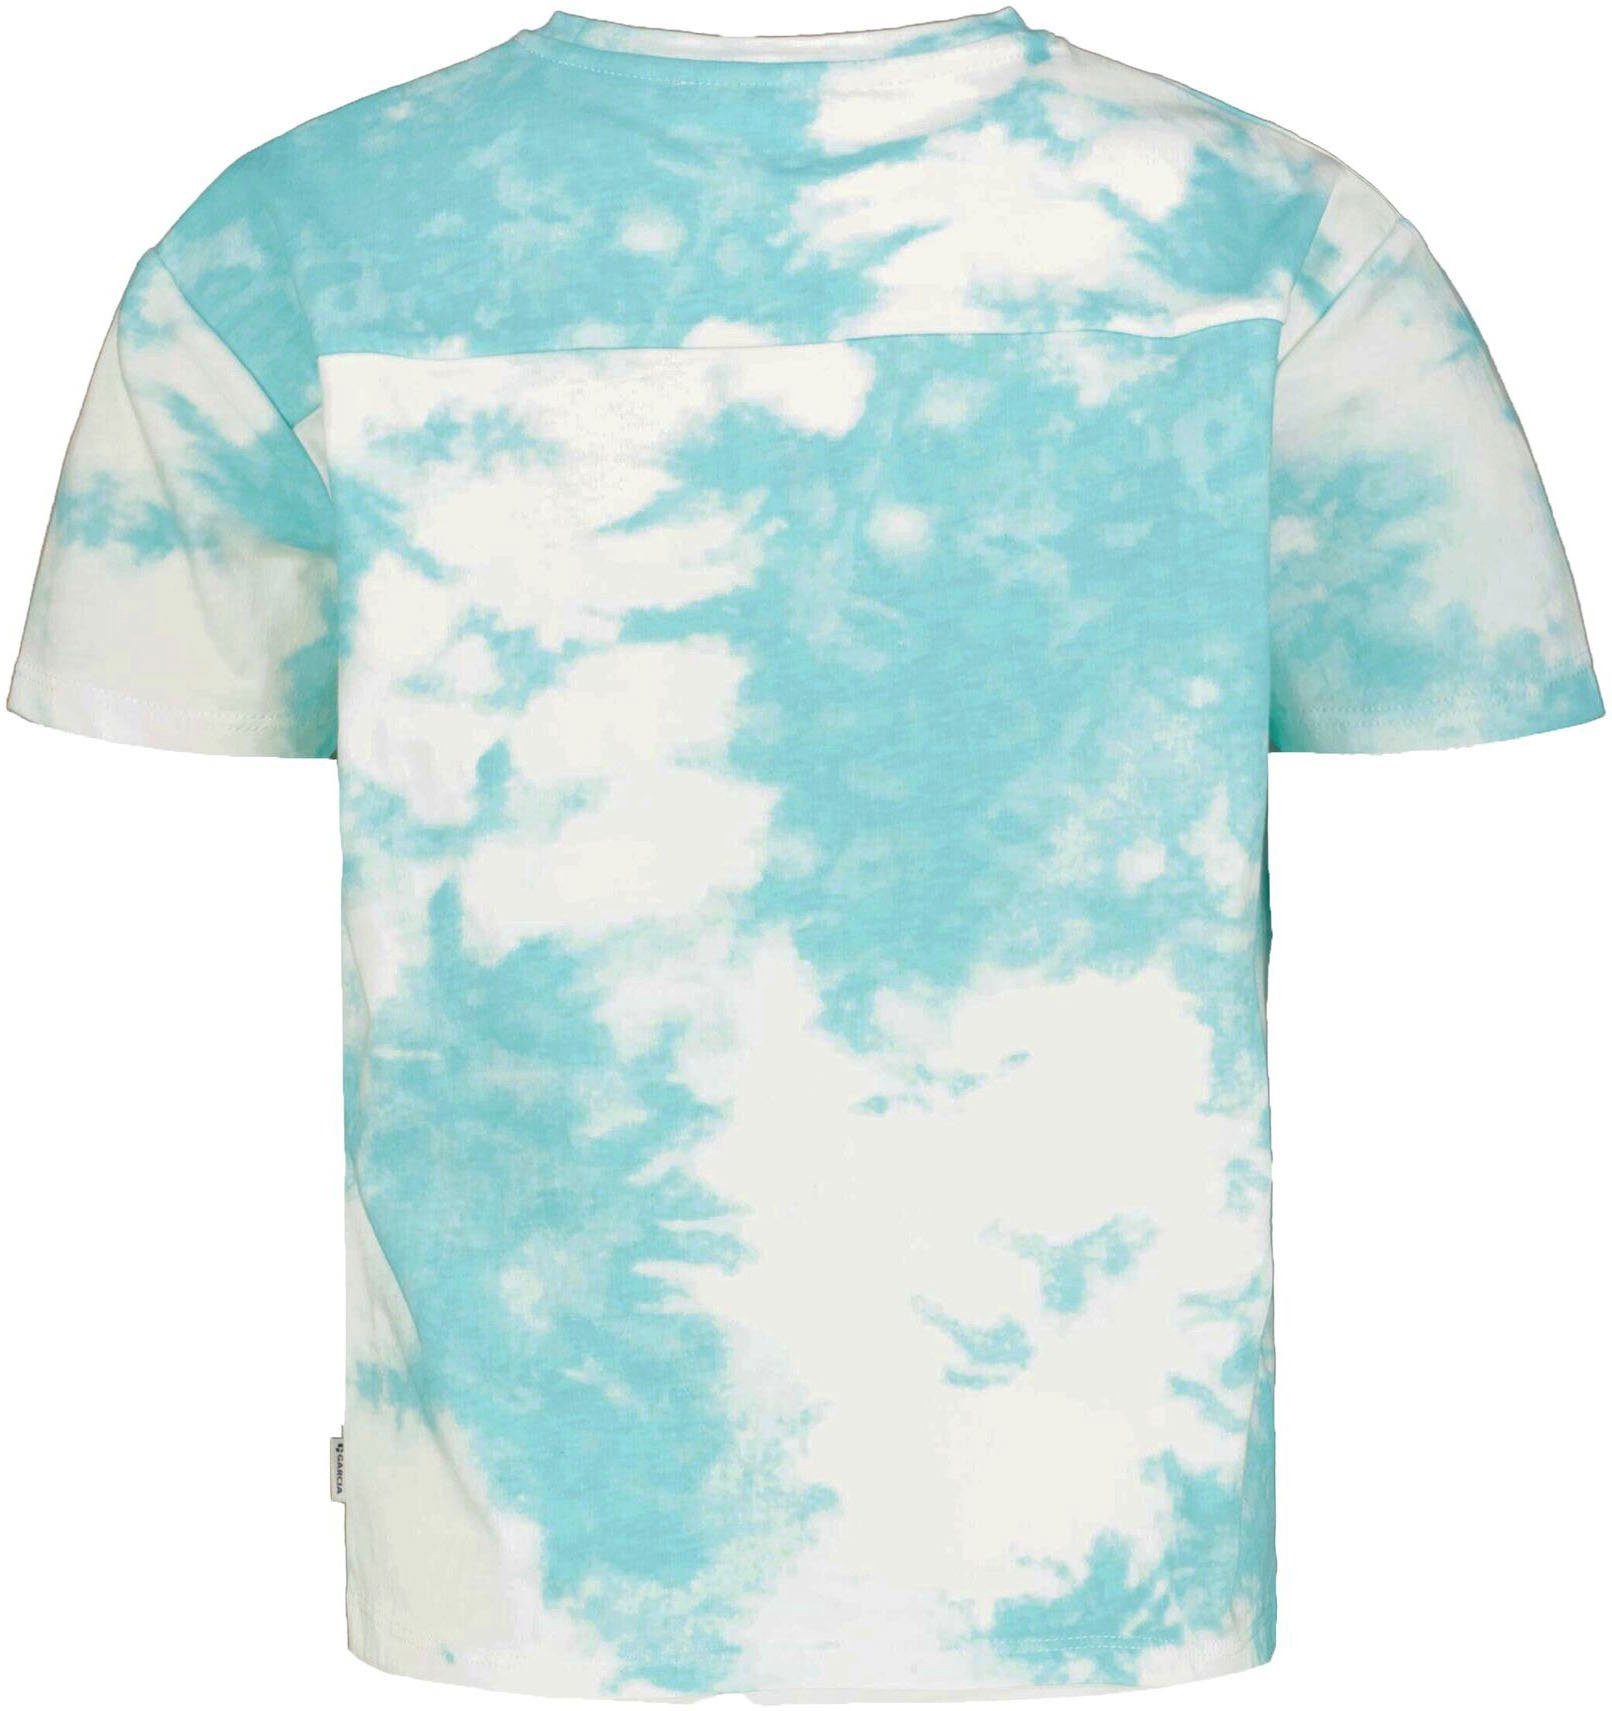 Garcia T-Shirt sea im Look crystal Batik